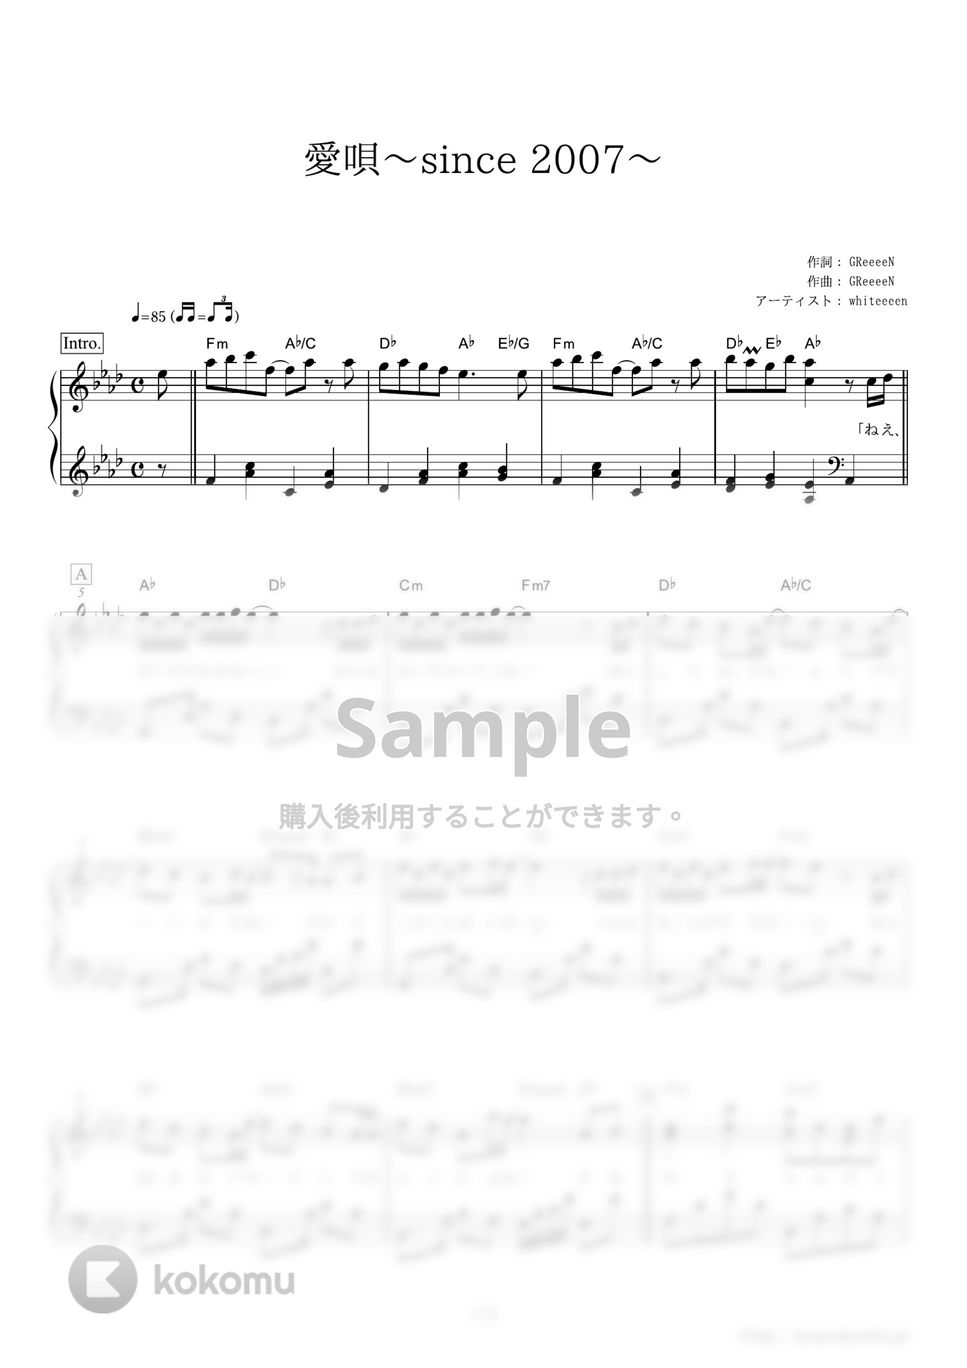 whiteeeen - 愛唄～since 2007～ (映画『ストロボ・エッジ』主題歌) by ピアノの本棚